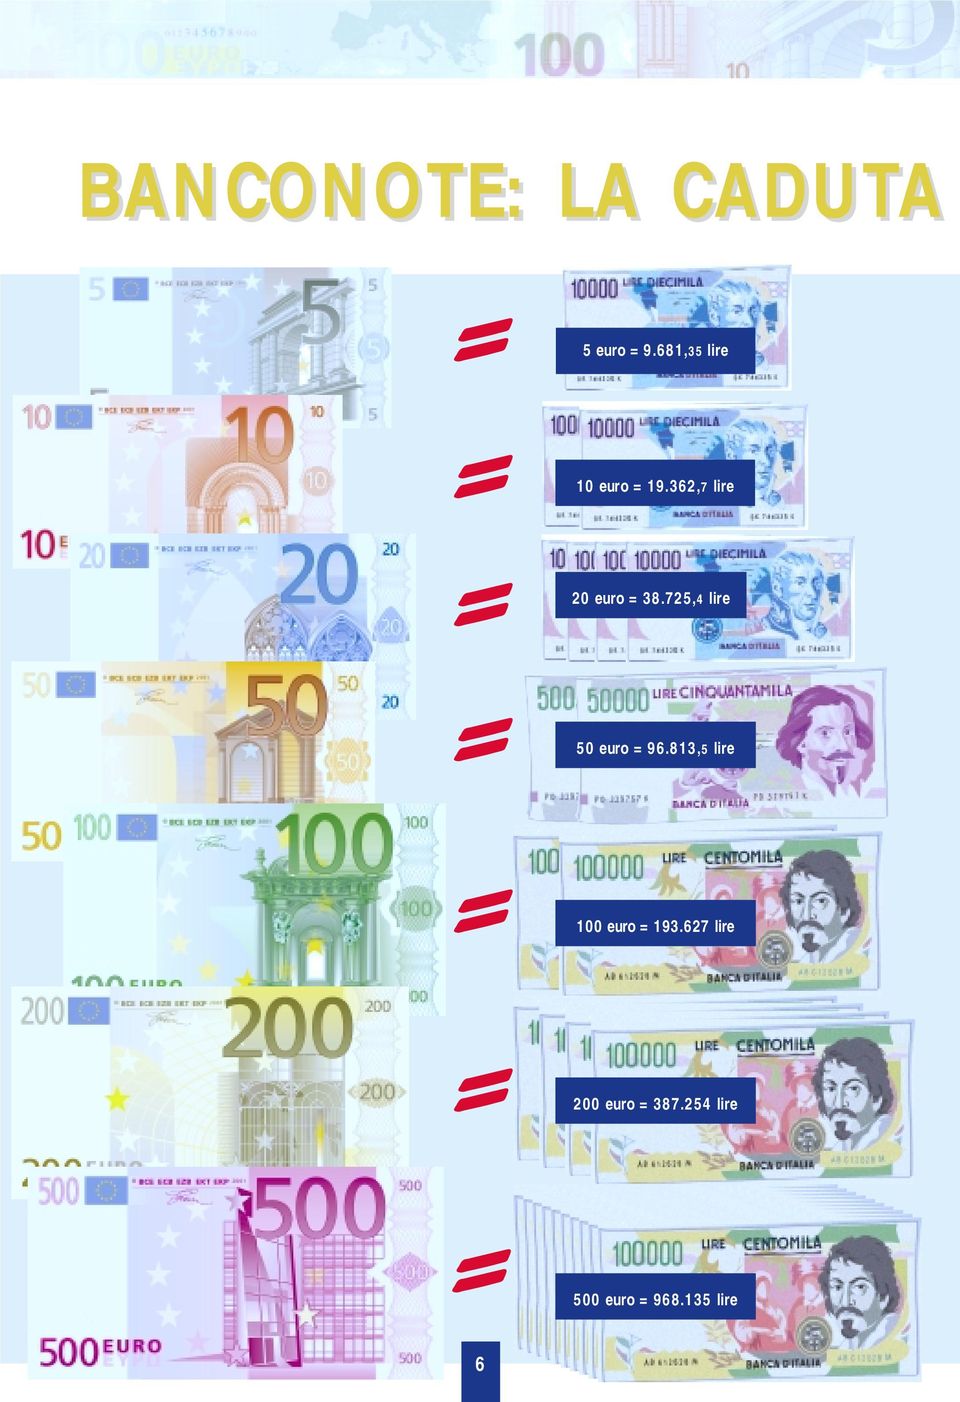 362,7 lire 20 euro 38.725,4 lire 50 euro 96.